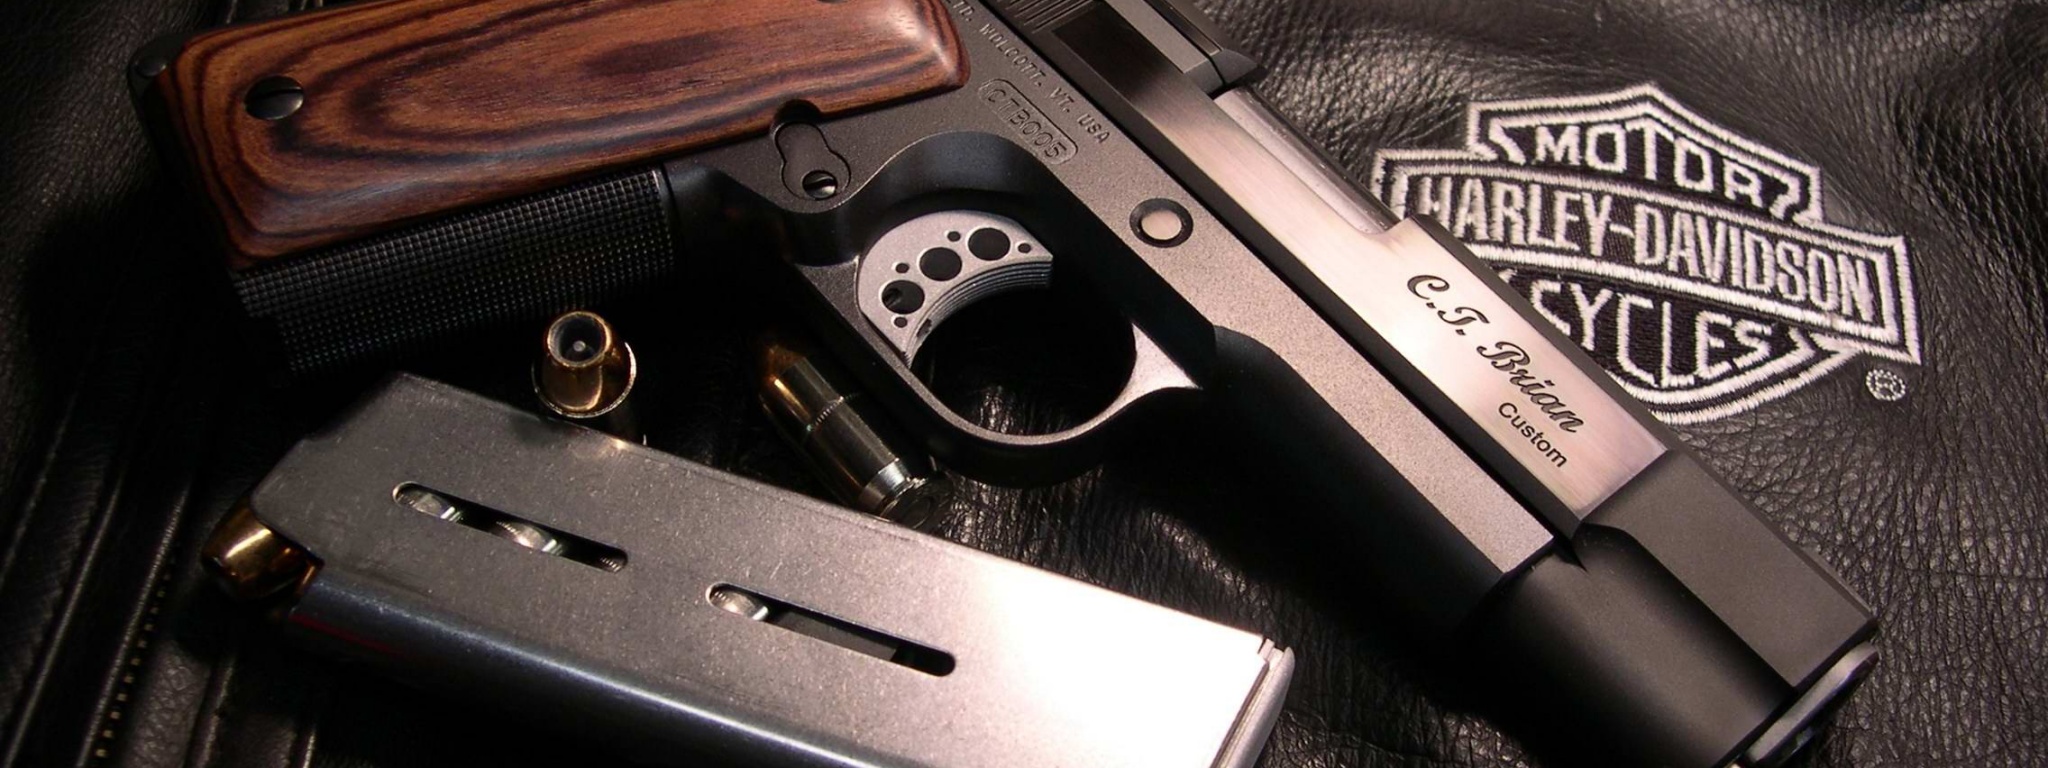 M1911 Pistol